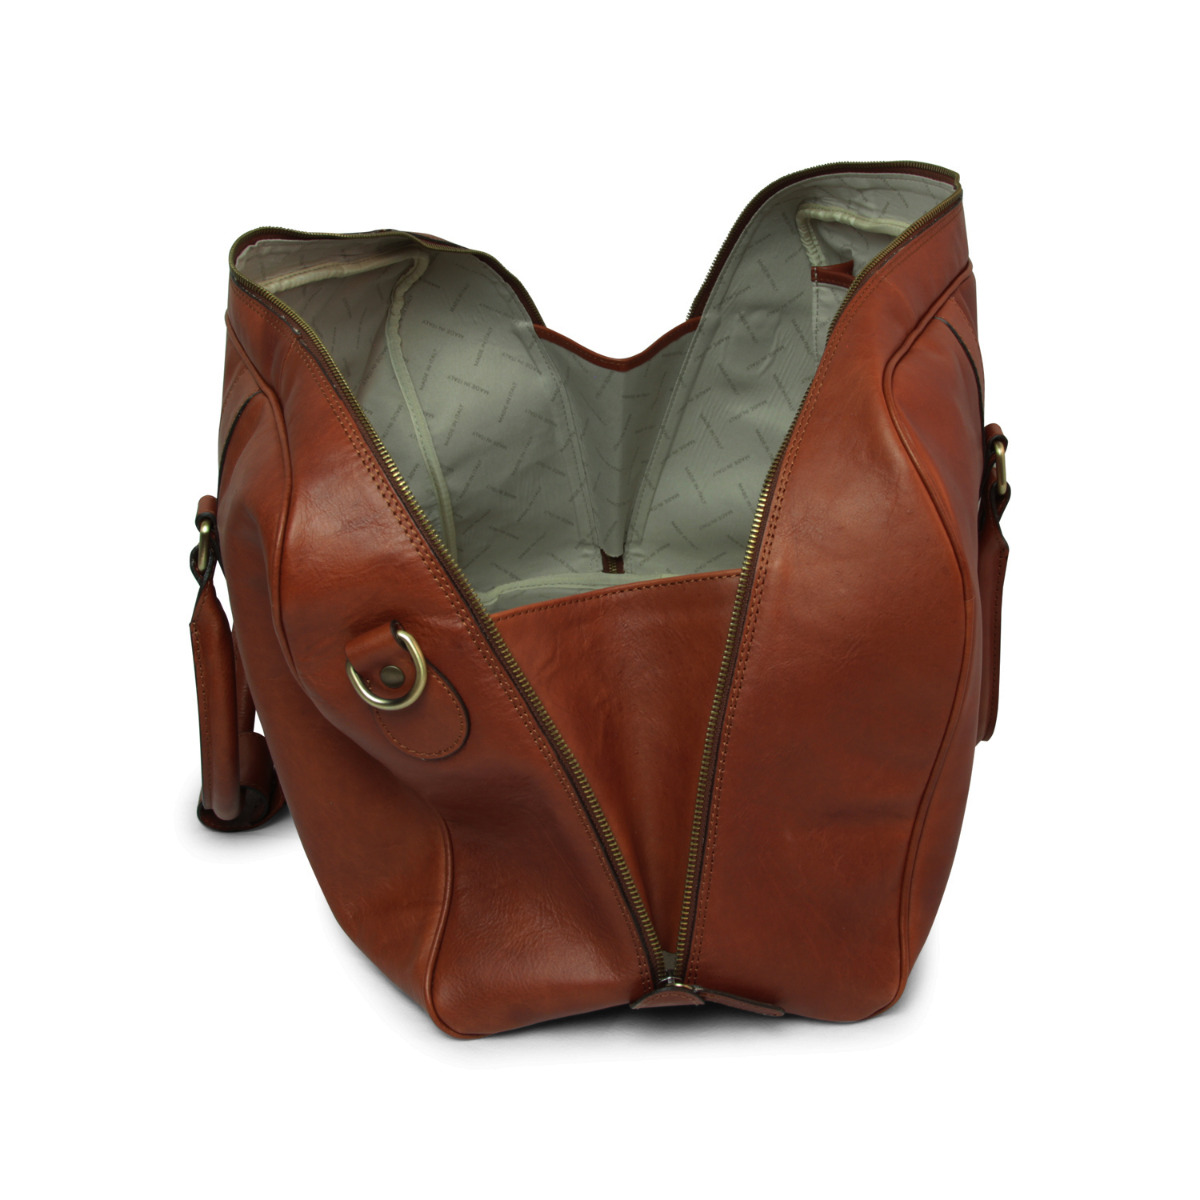 Full grain leather large travel bag - brown *|414991ma|Old Angler Firenze